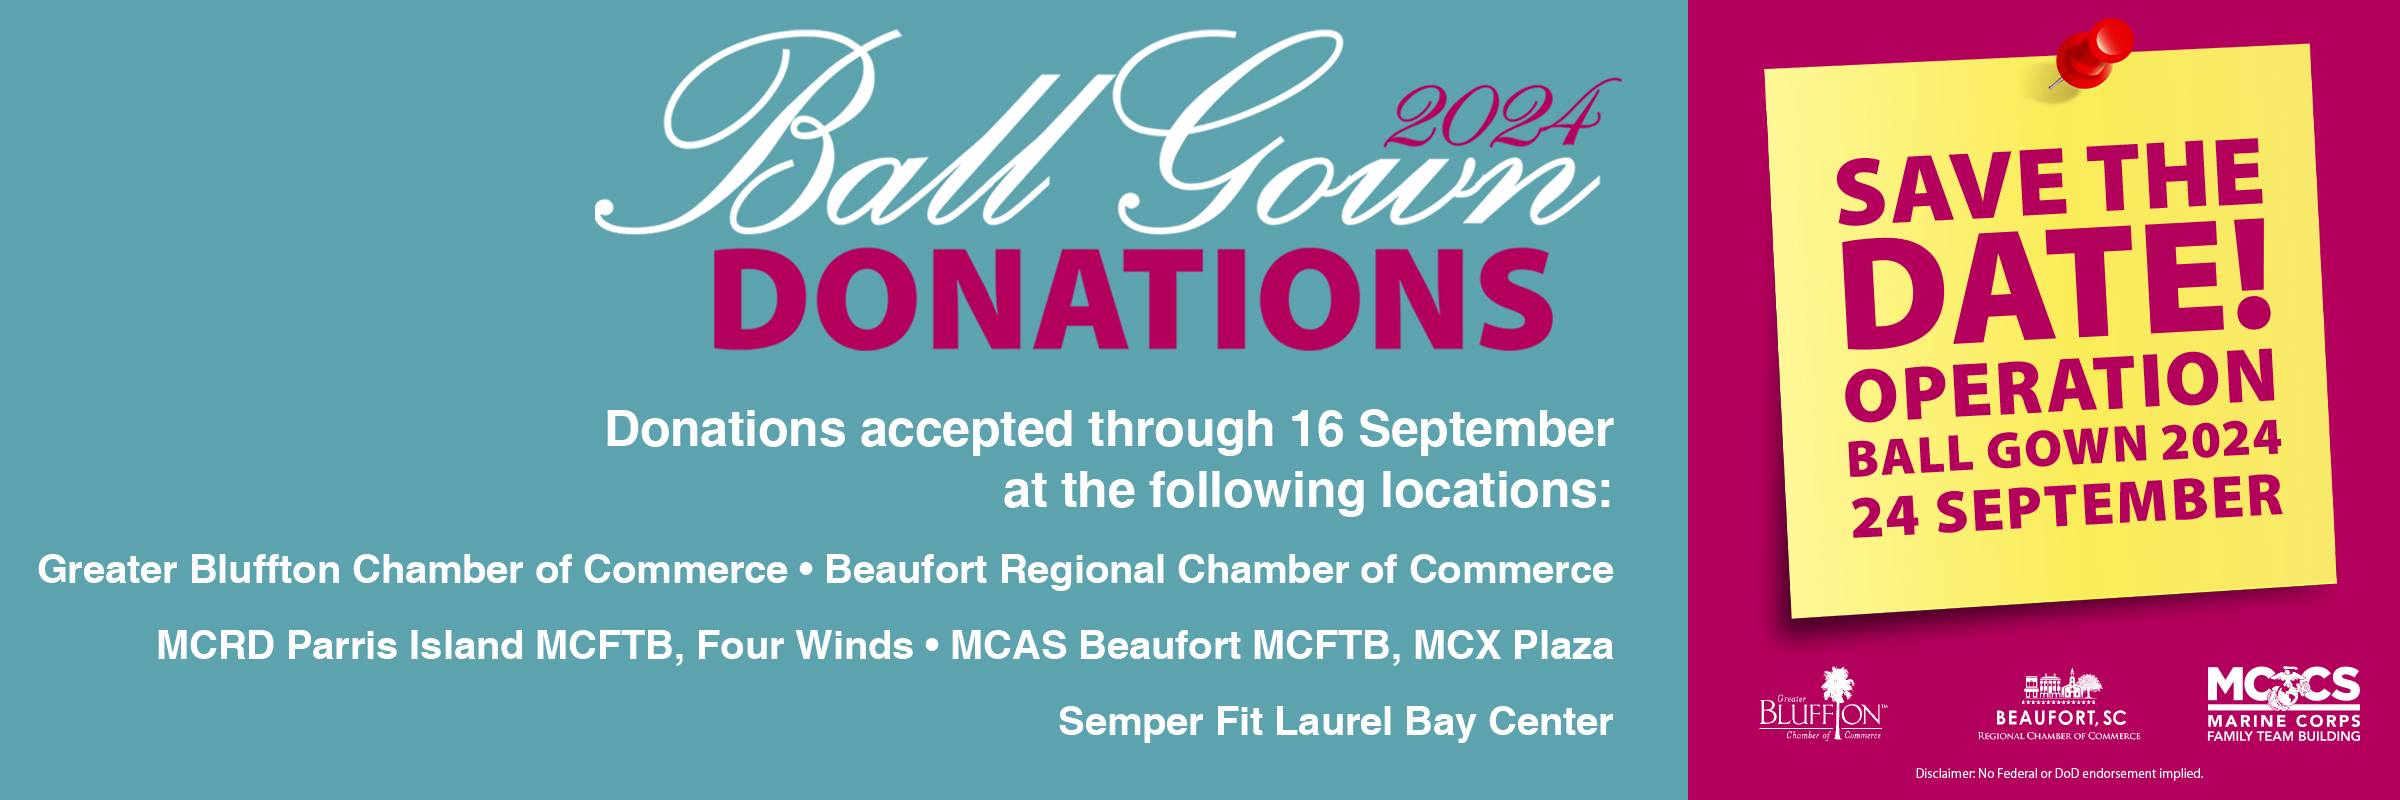 08-01 Ball Gown Donations 2024_WEB.jpg